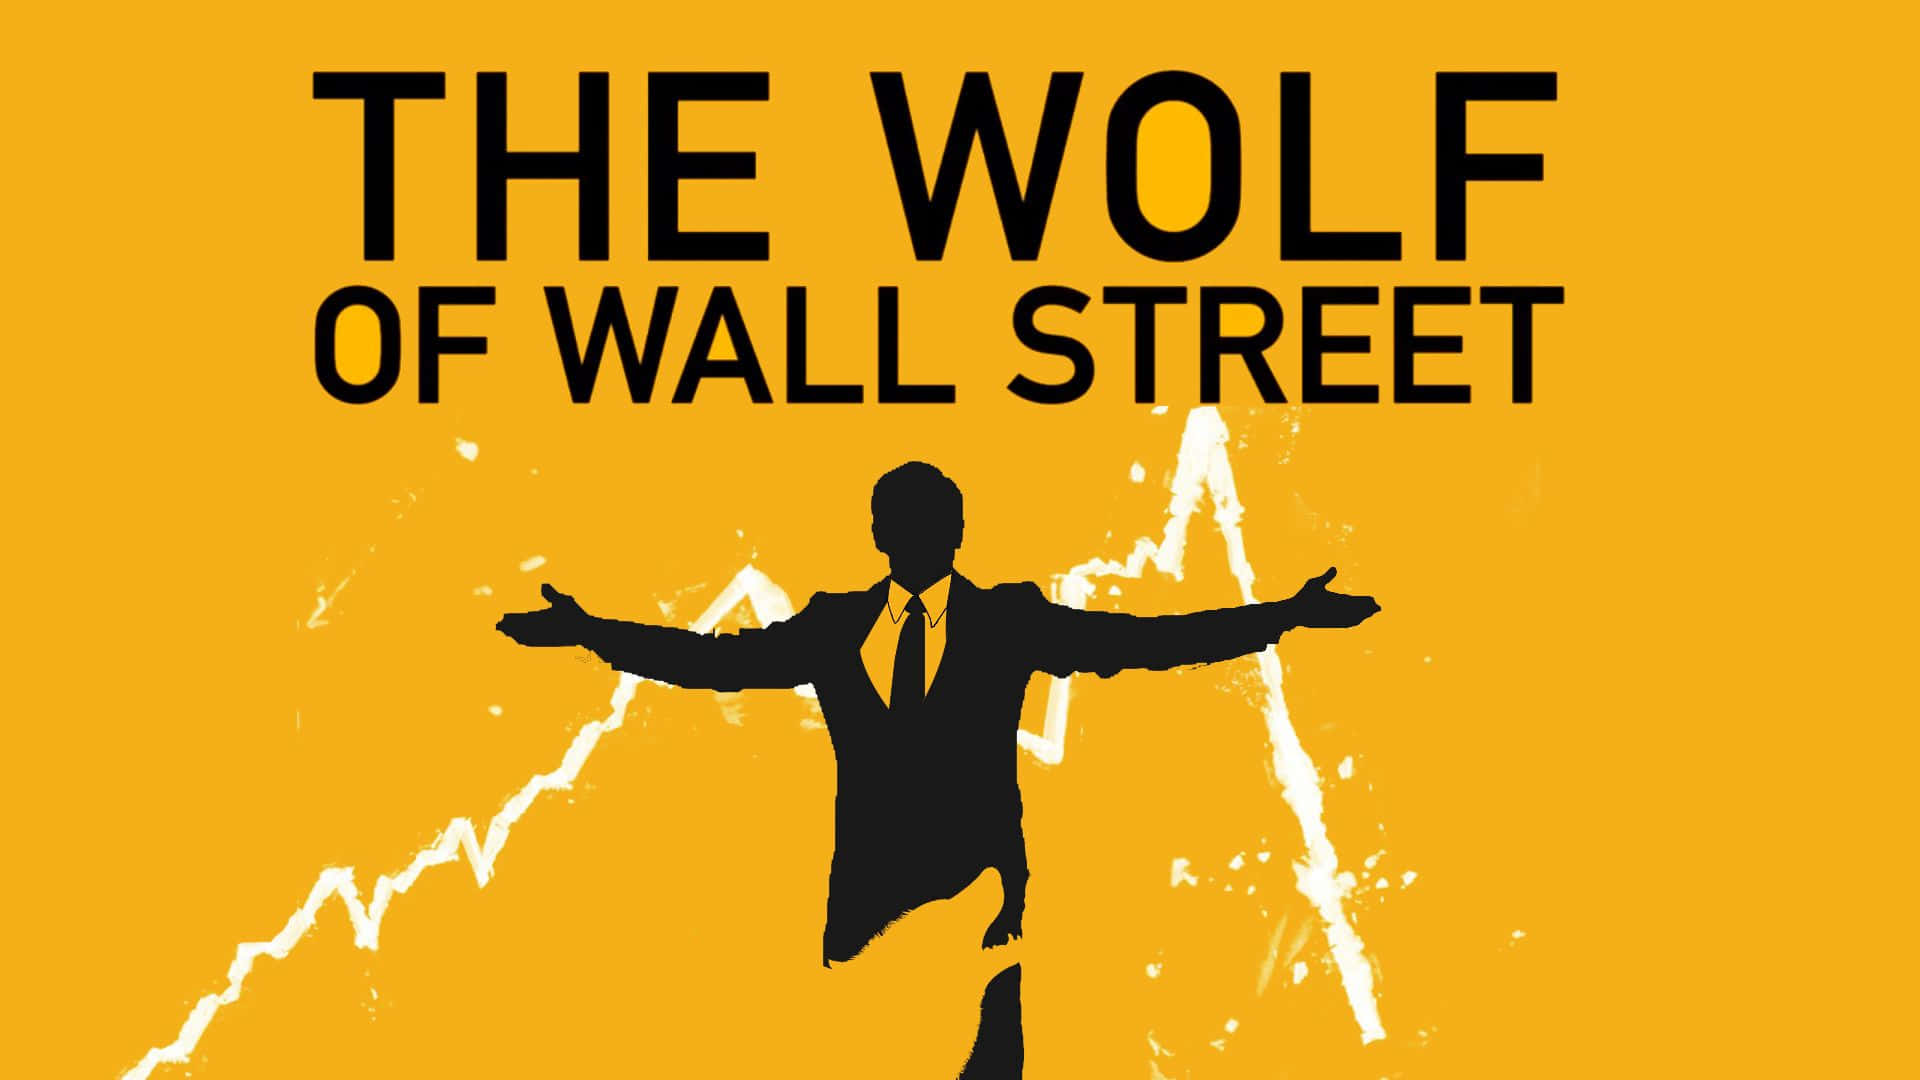 Image  Leonardo DiCaprio in character as Jordan Belfort in The Wolf of Wall Street Wallpaper